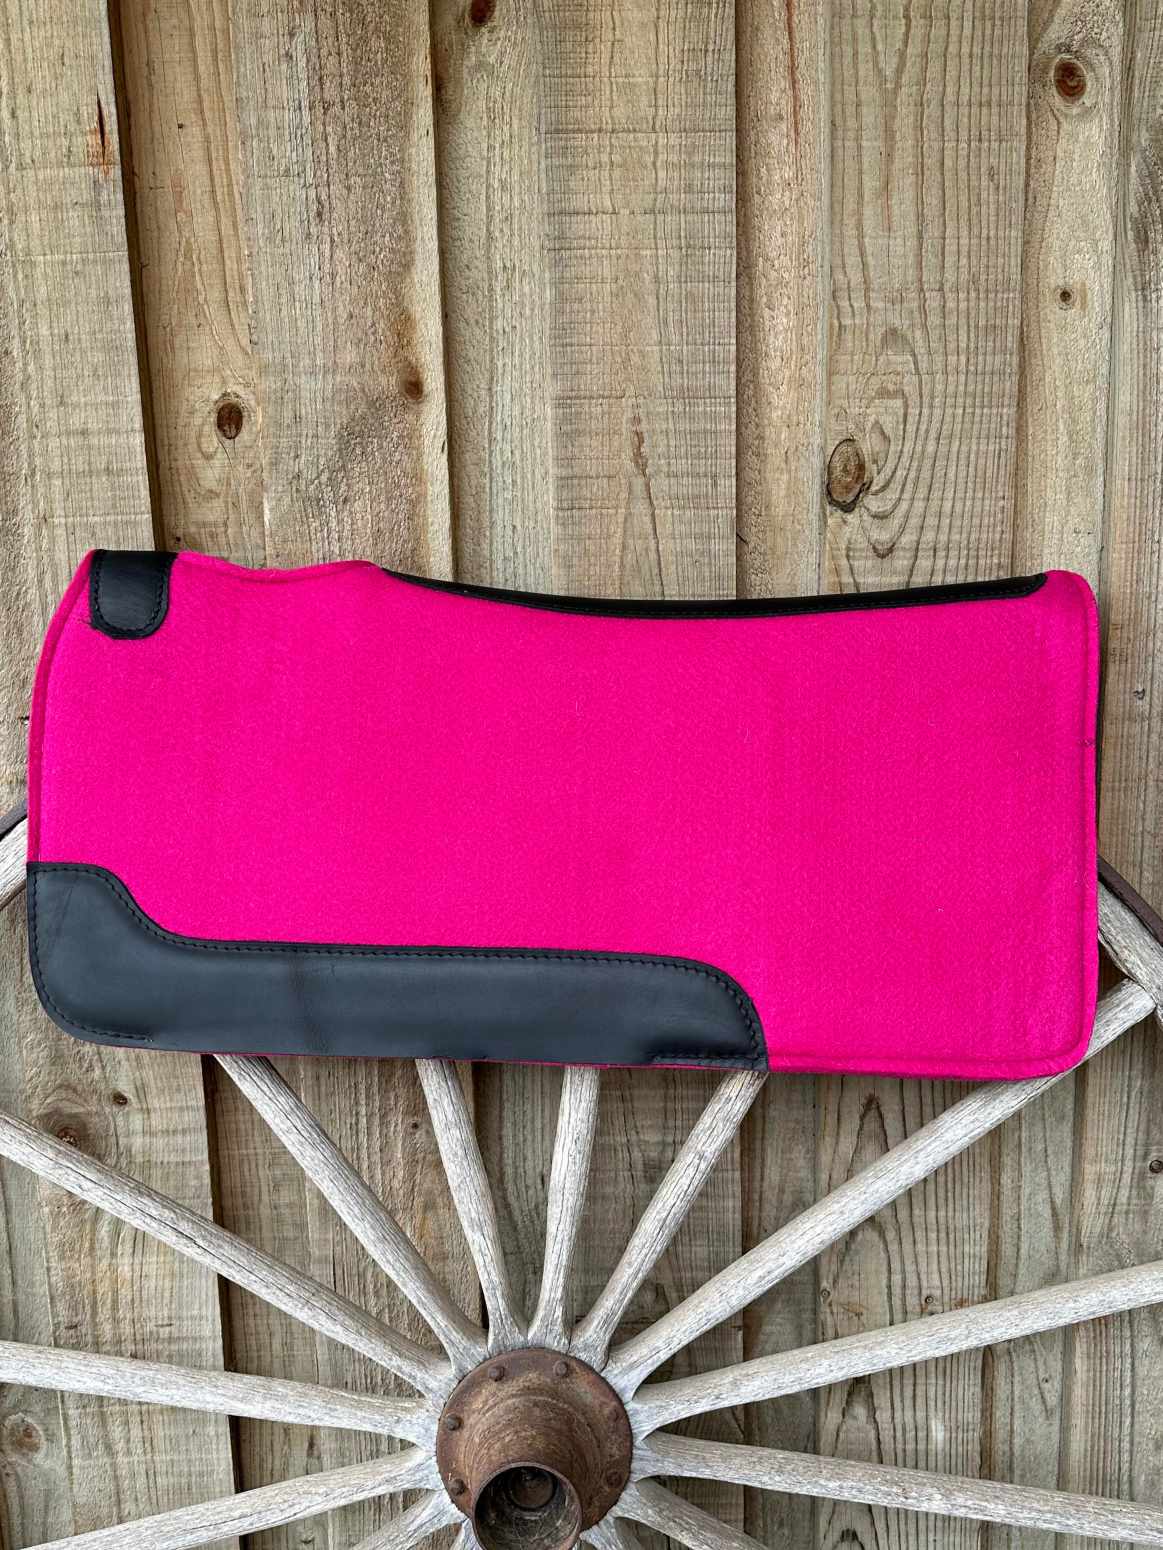 Western Saddle Pad Felt Contour Style Pink 31x31  SECONDS